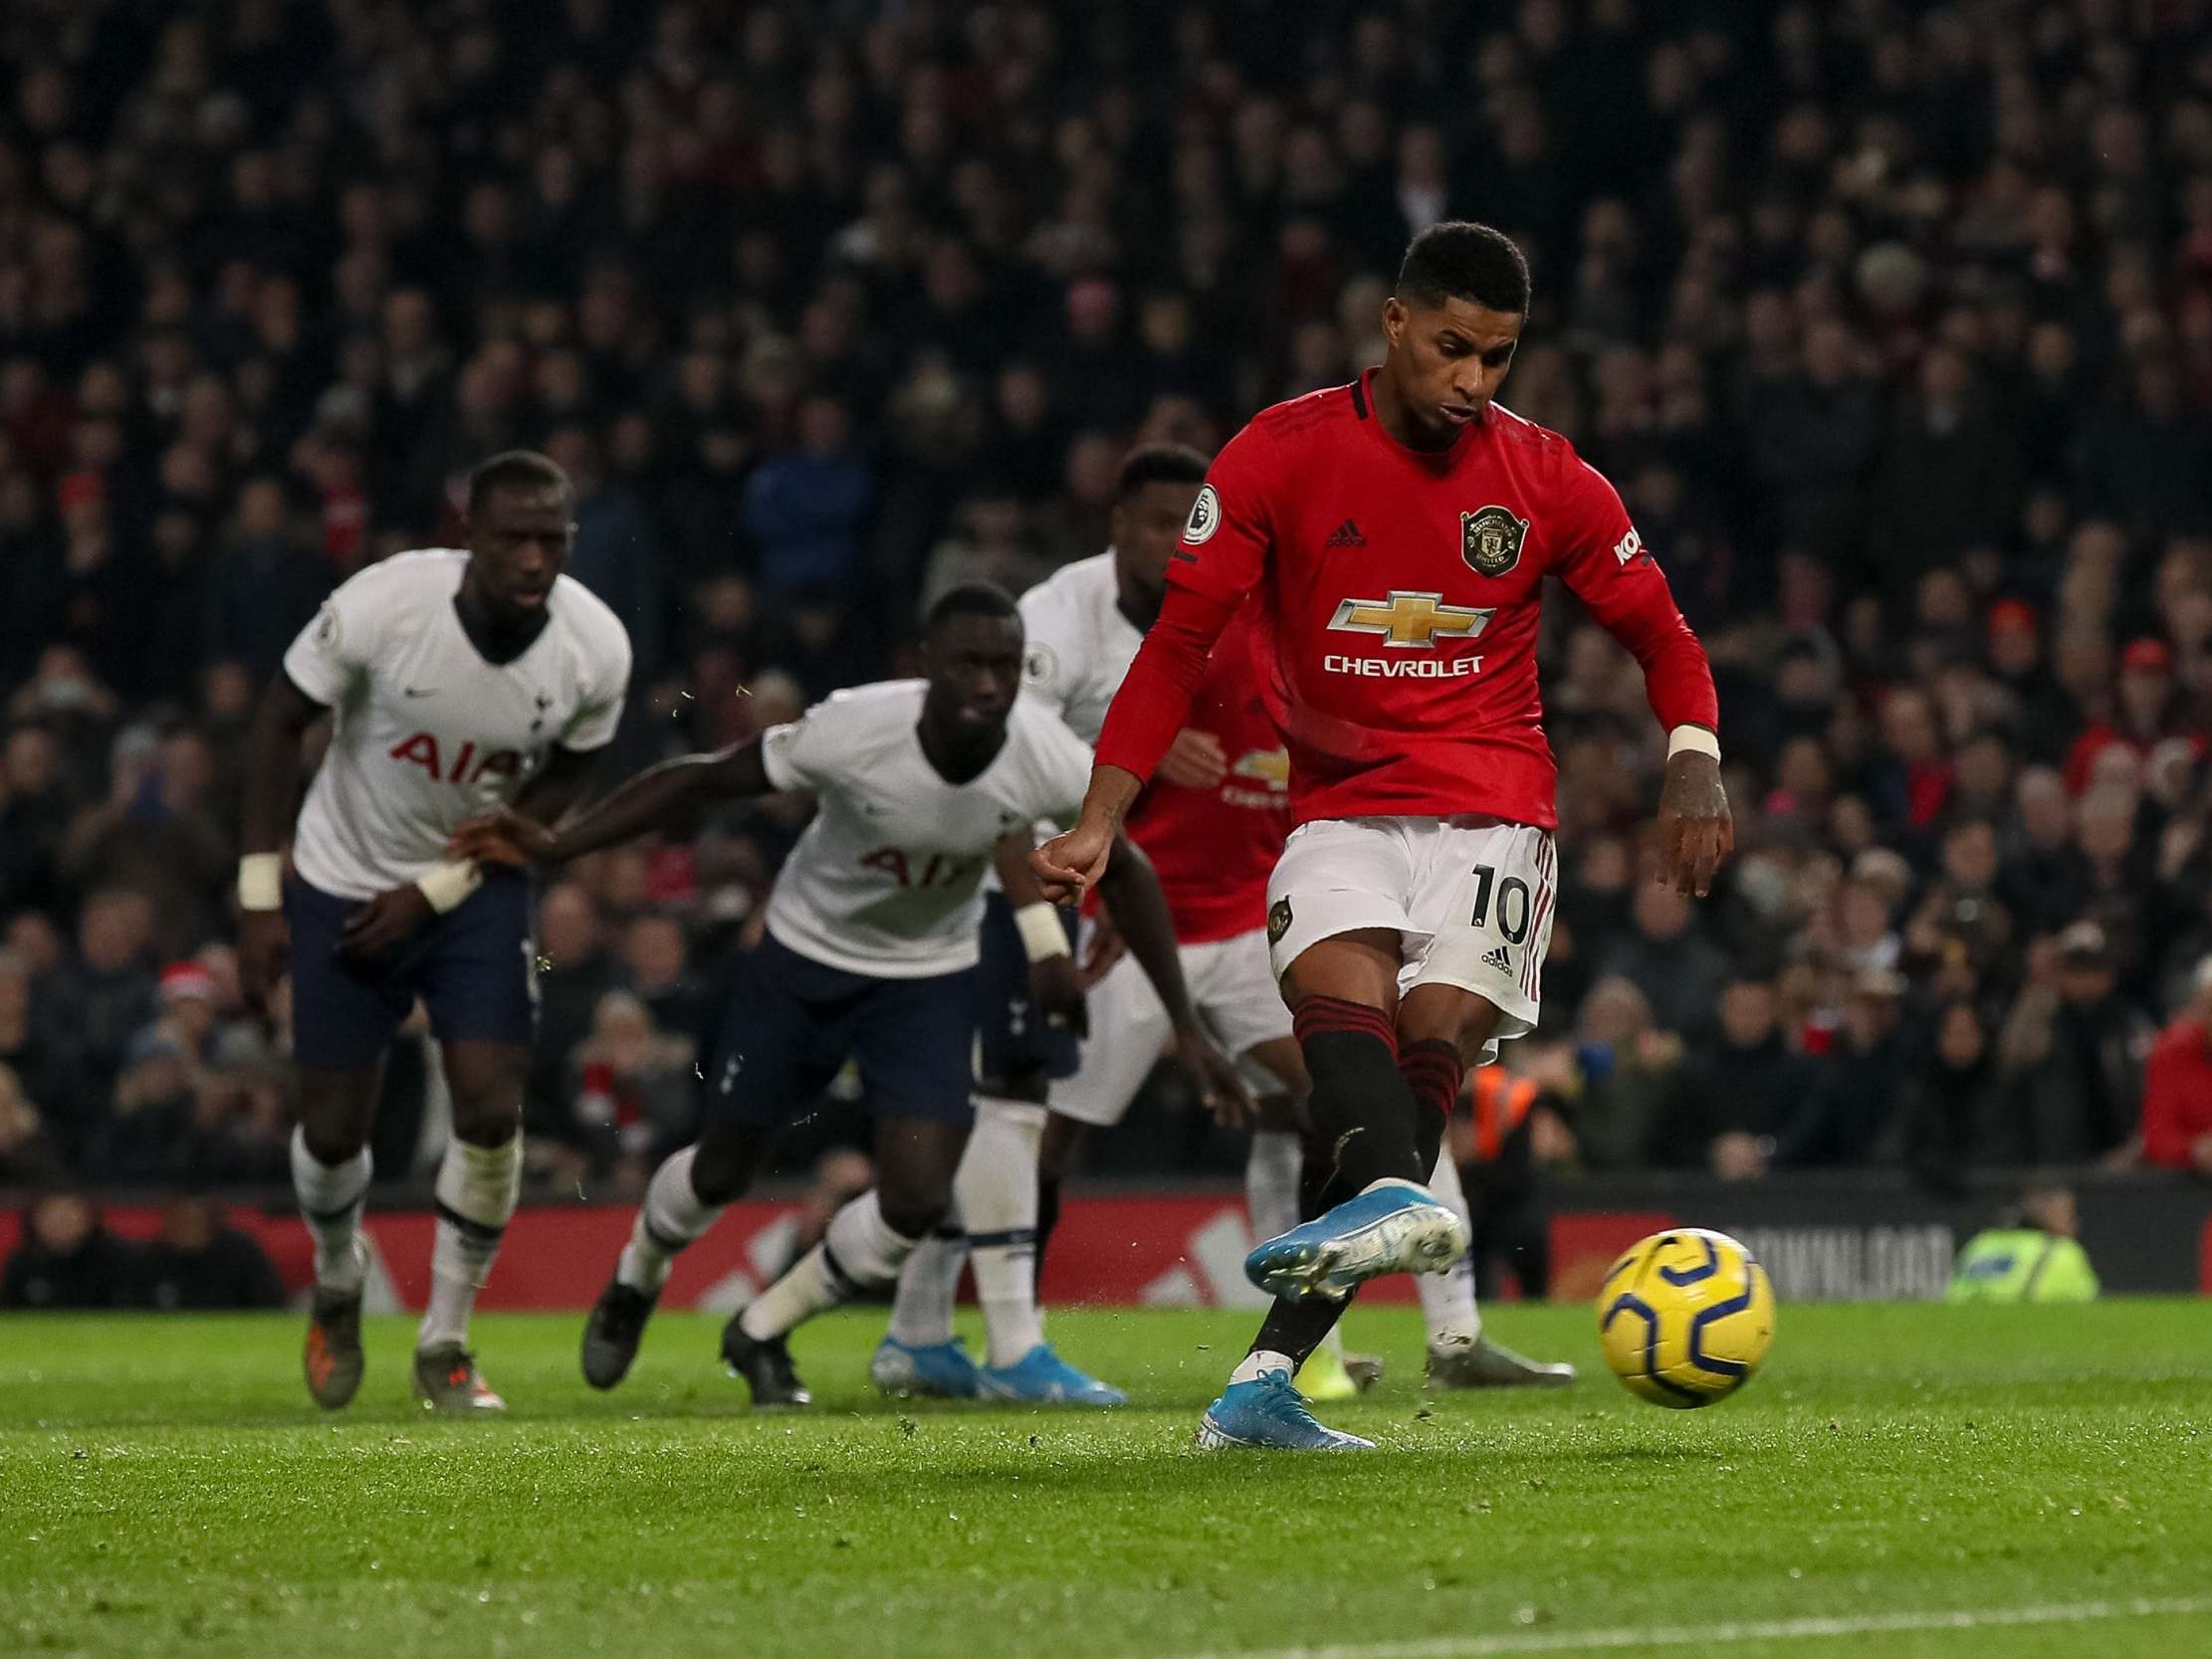 Manchester United vs Tottenham LIVE: Latest score, goals and updates from Premier League fixture tonight